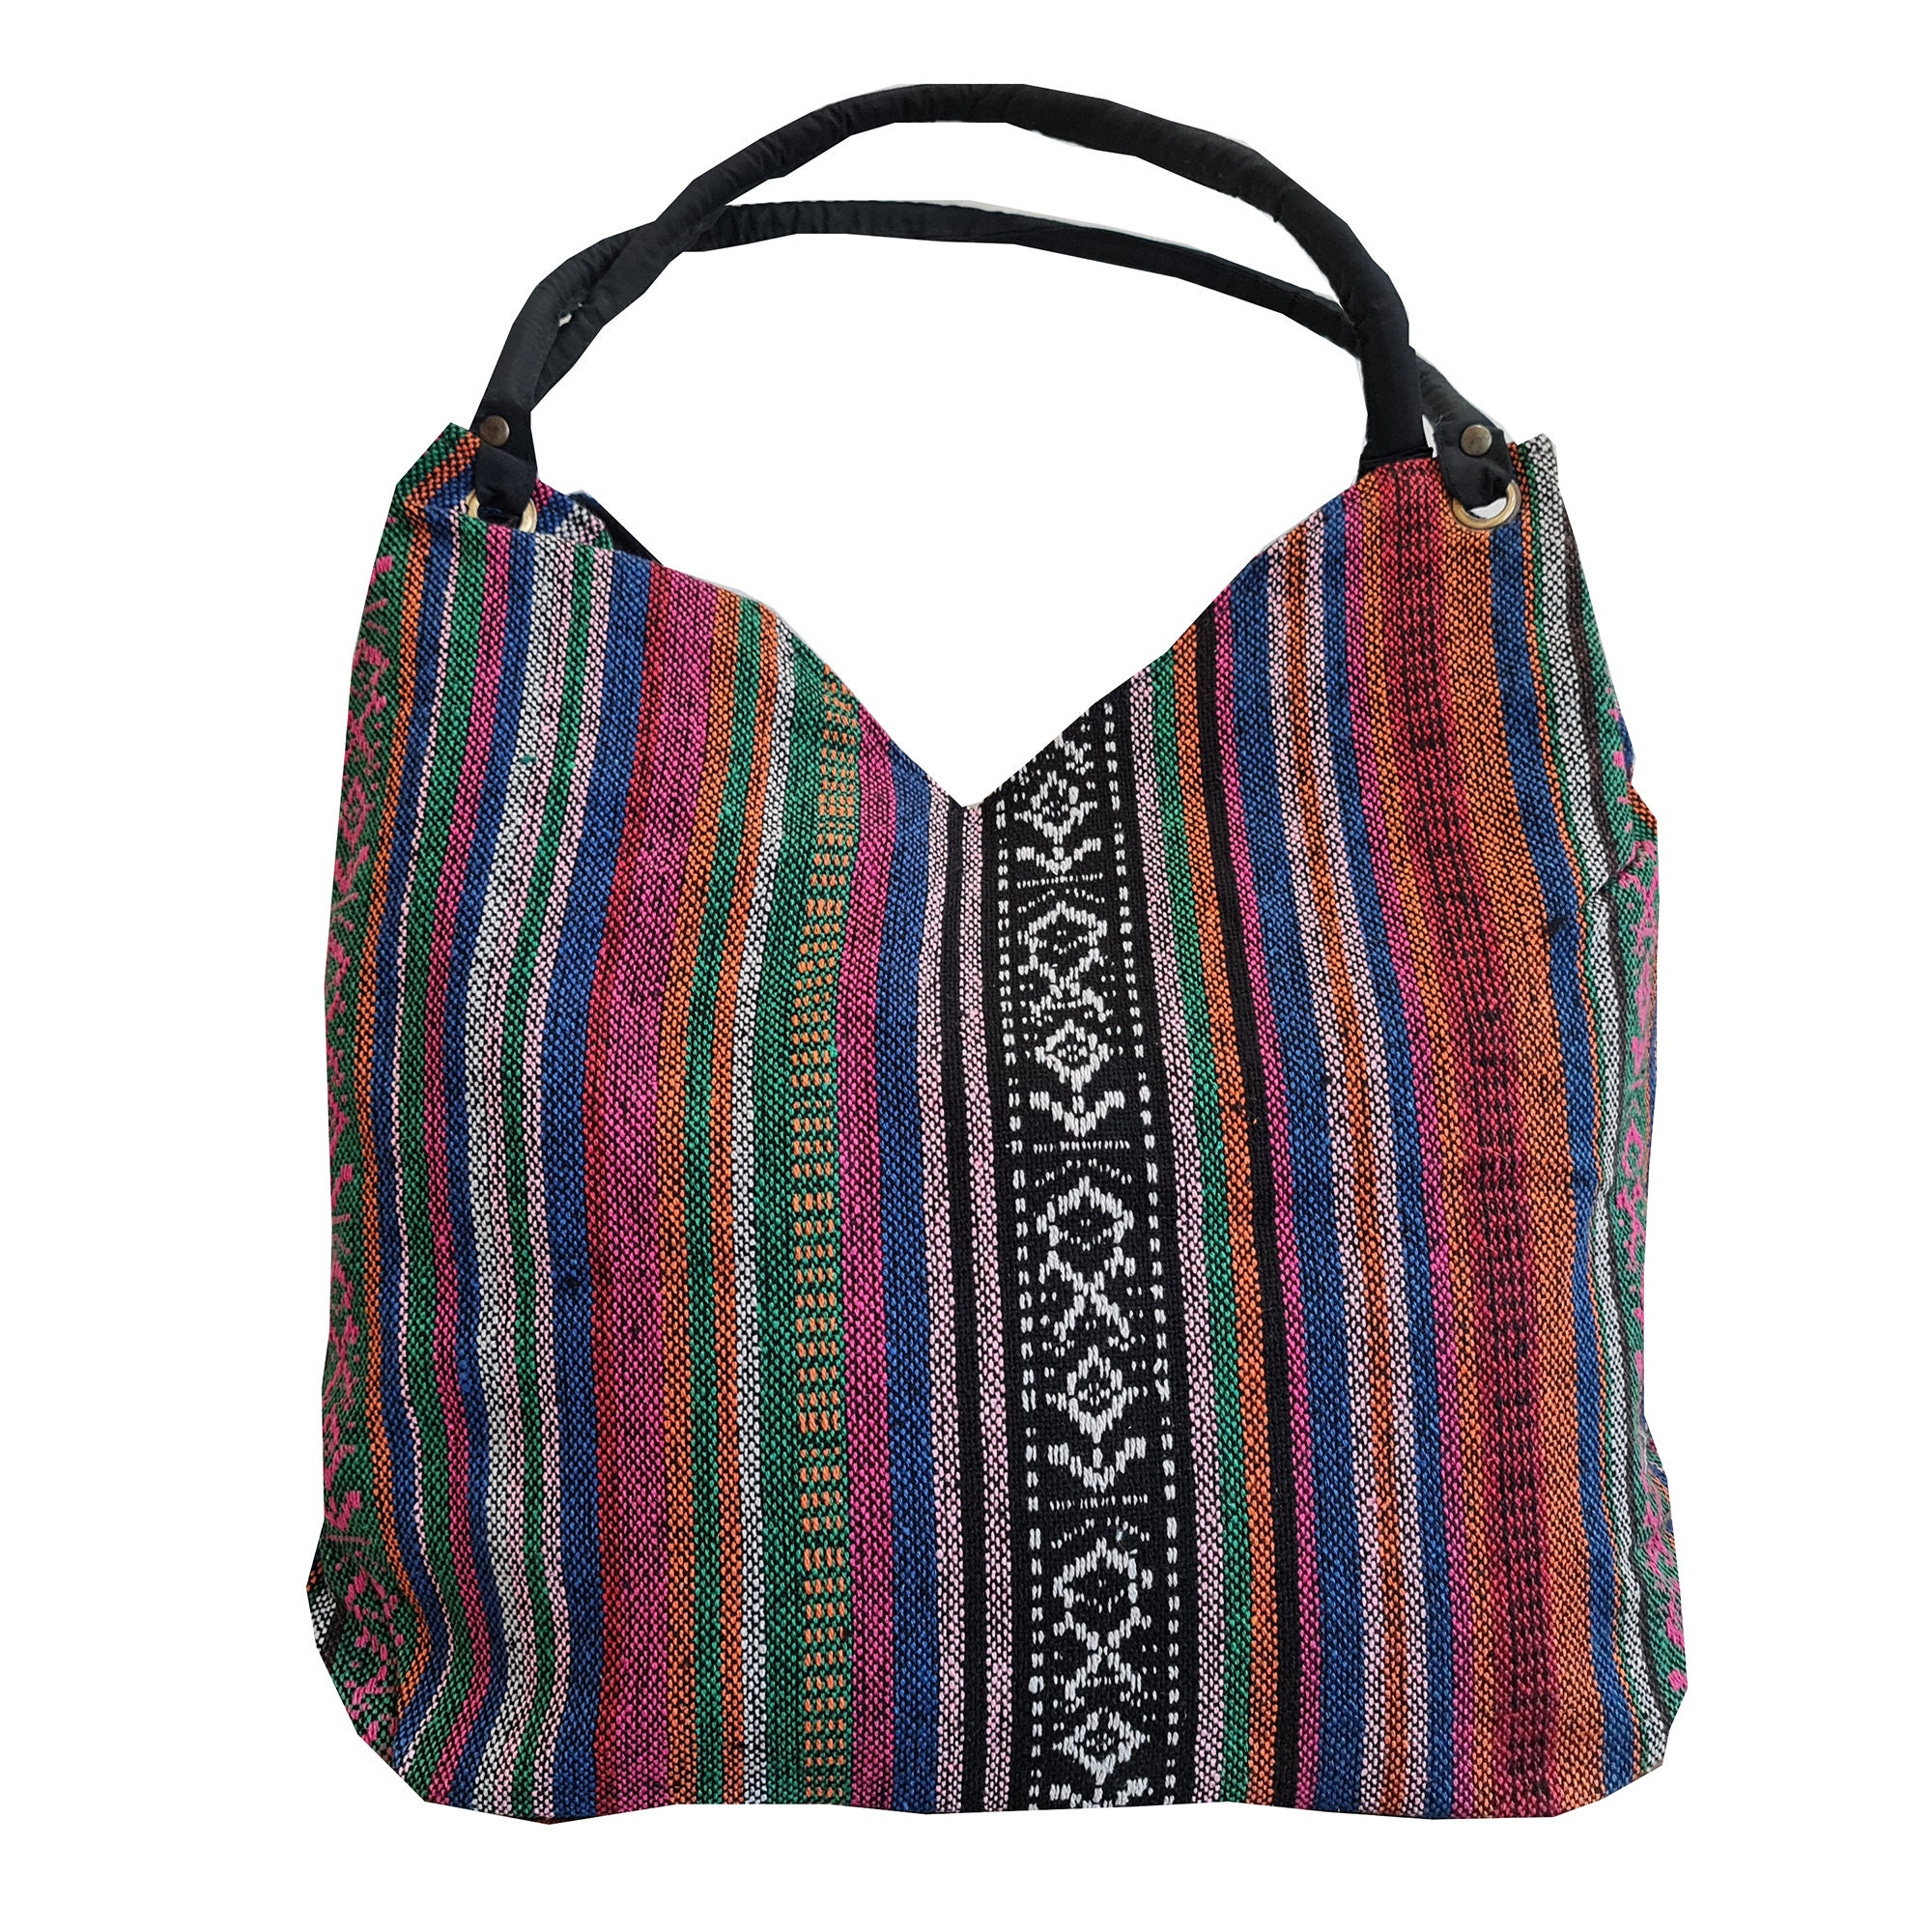 Crochet Bag Made From Recycled Ribbon Yarn, Textile Yarn, Shopper